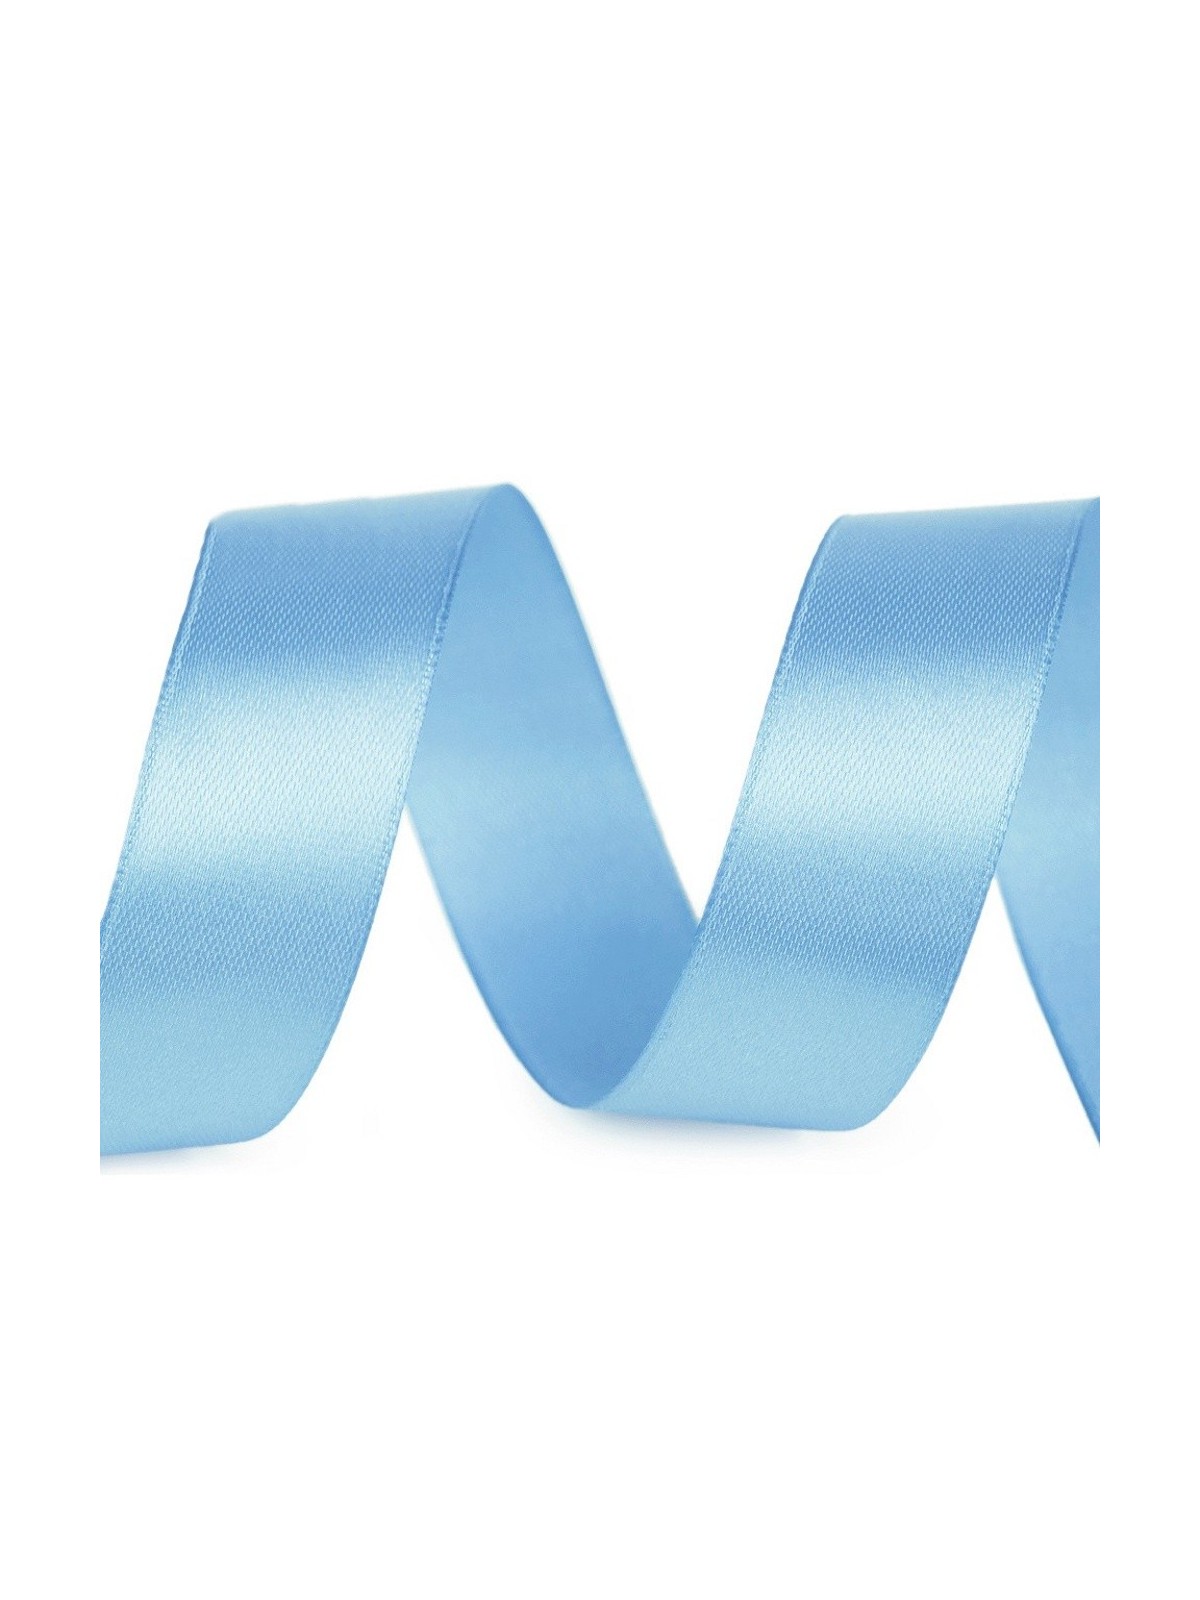 Satin ribbon - baby blue - 22.5m / 25mm